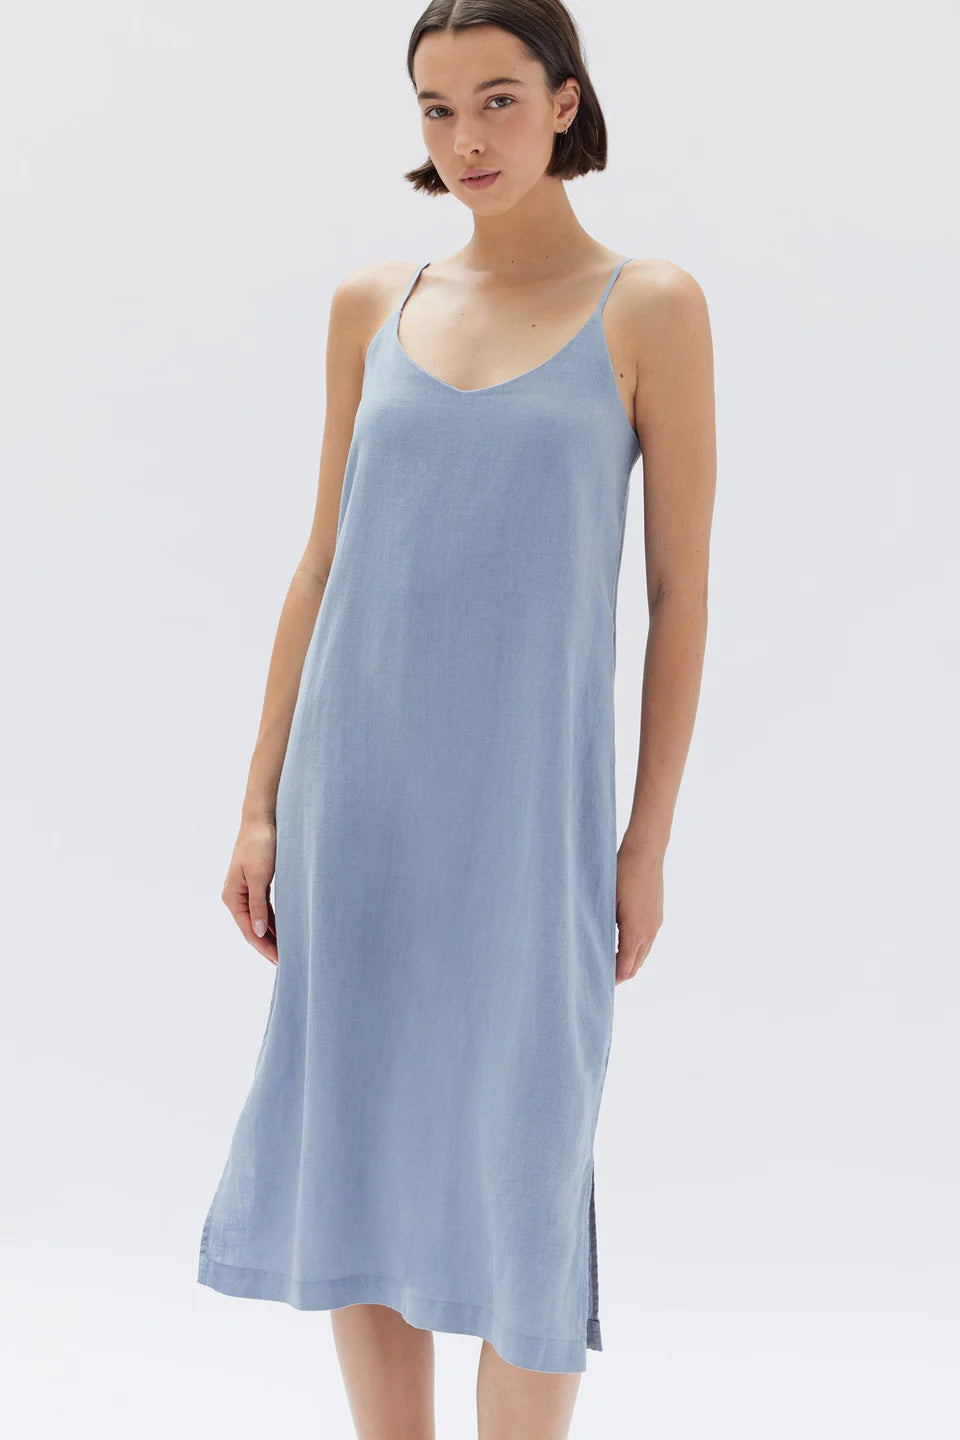 ASSEMBLY LABEL - Linen Slip Dress - Glacial